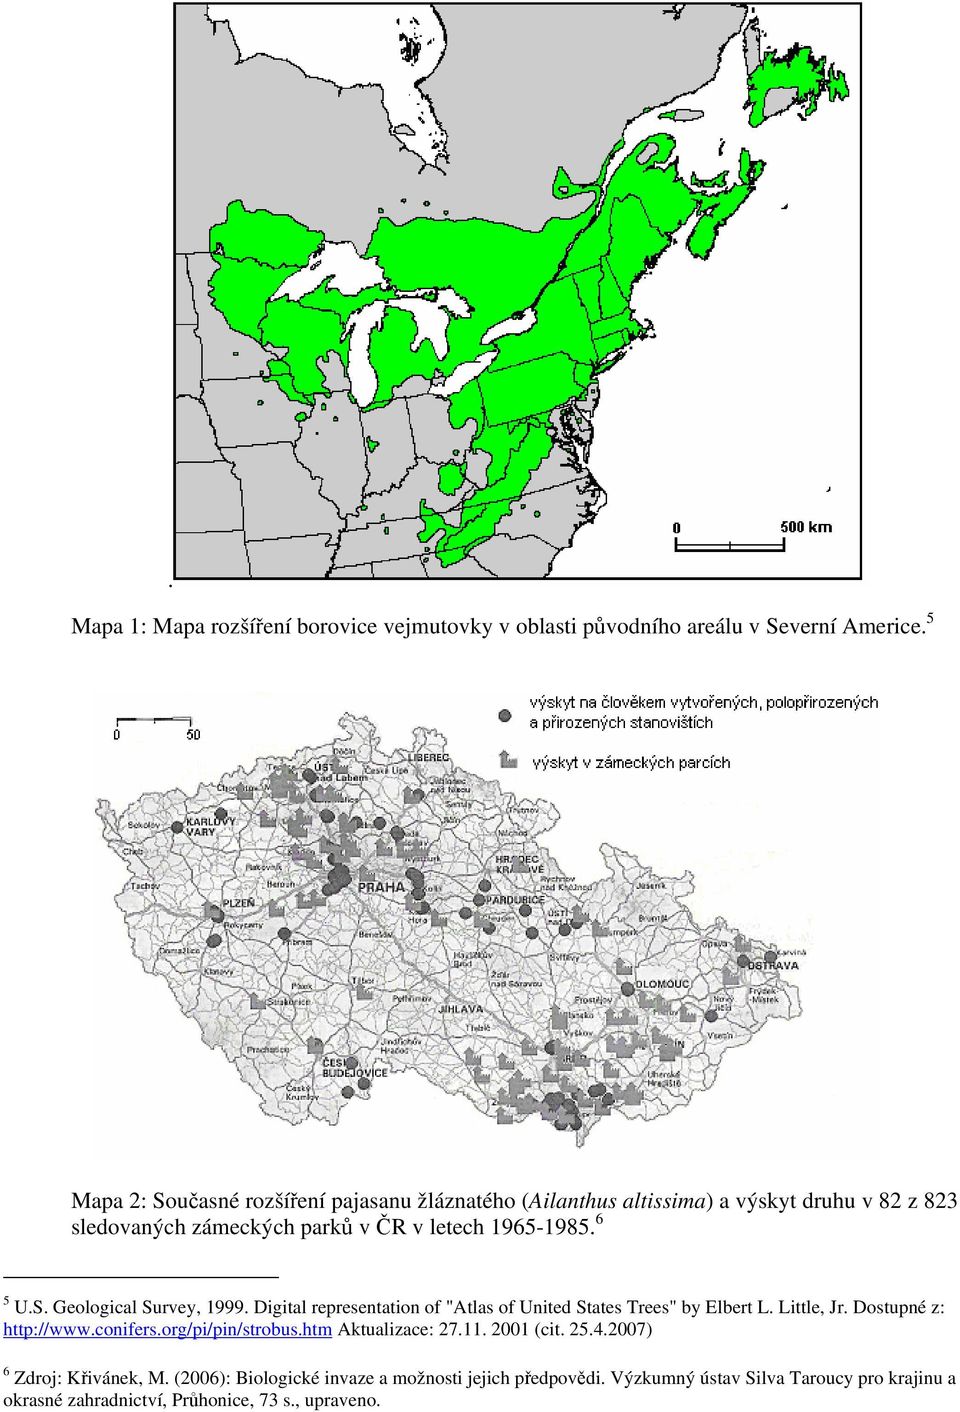 S. Geological Survey, 1999. Digital representation of "Atlas of United States Trees" by Elbert L. Little, Jr. Dostupné z: http://www.conifers.